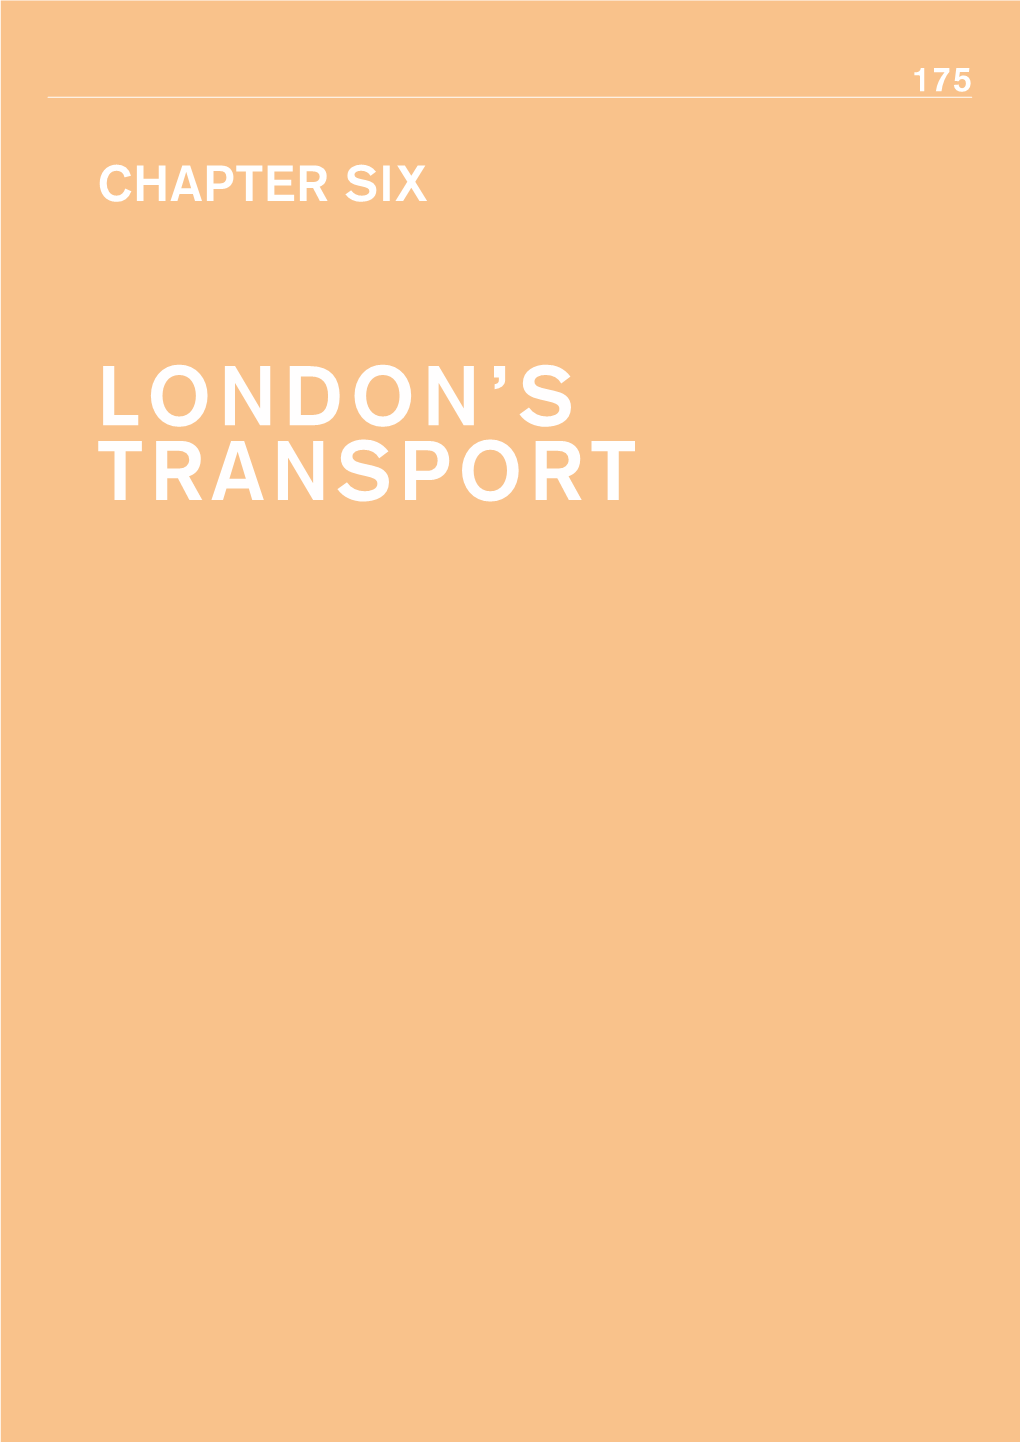 London's Transport